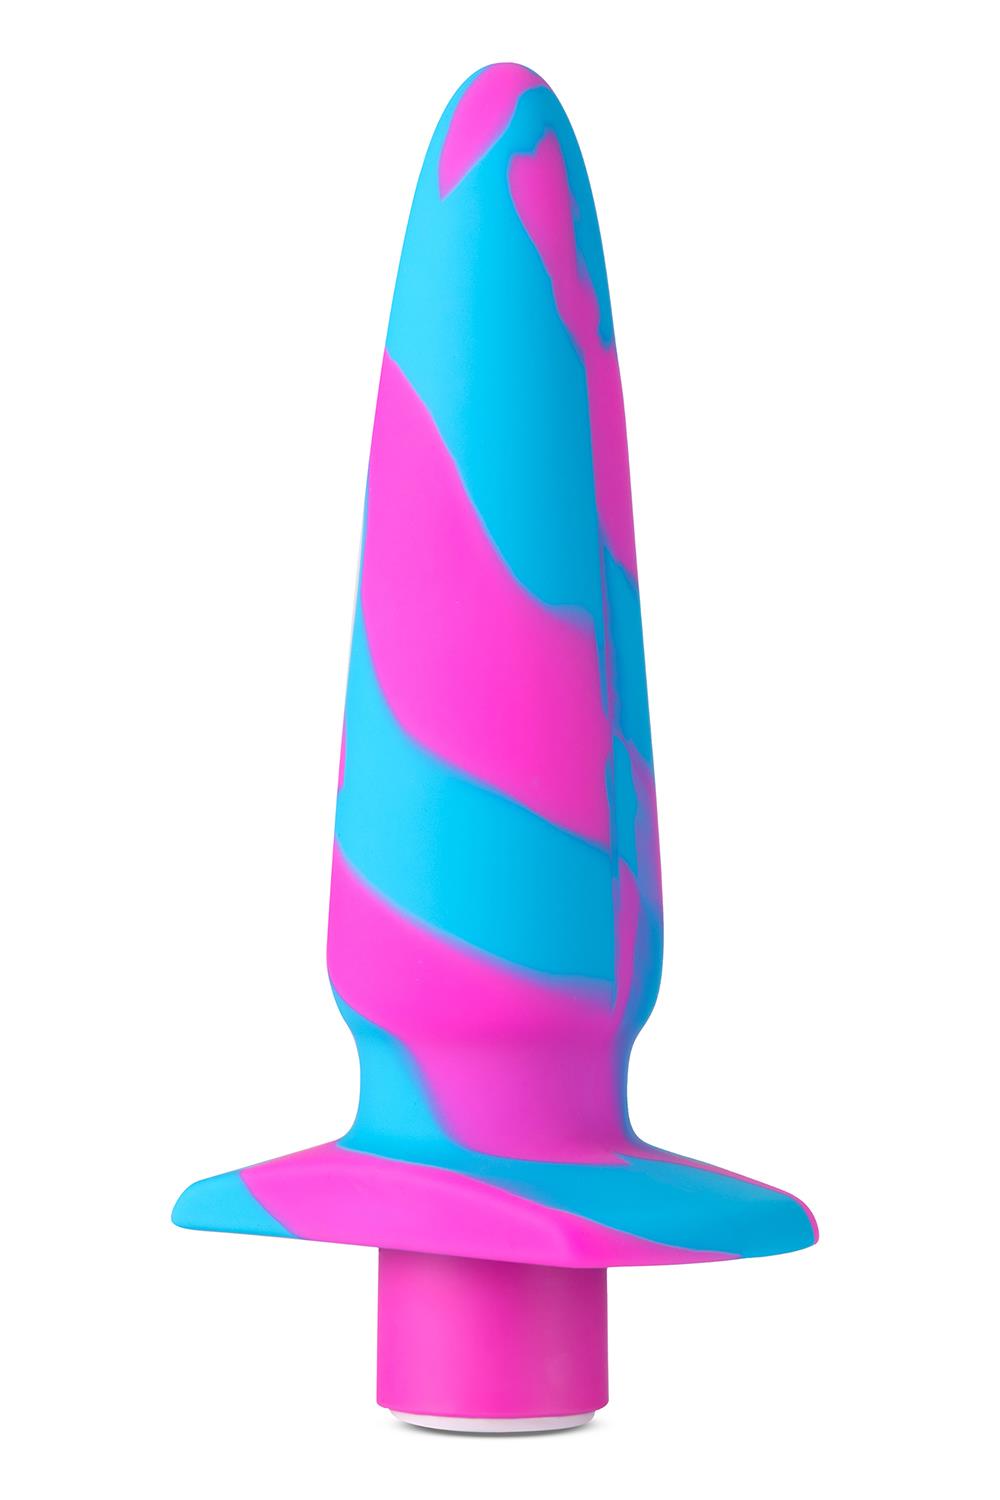 Blush Avant pink and blue vibration anal plug, 12.7 x 3.1 cm